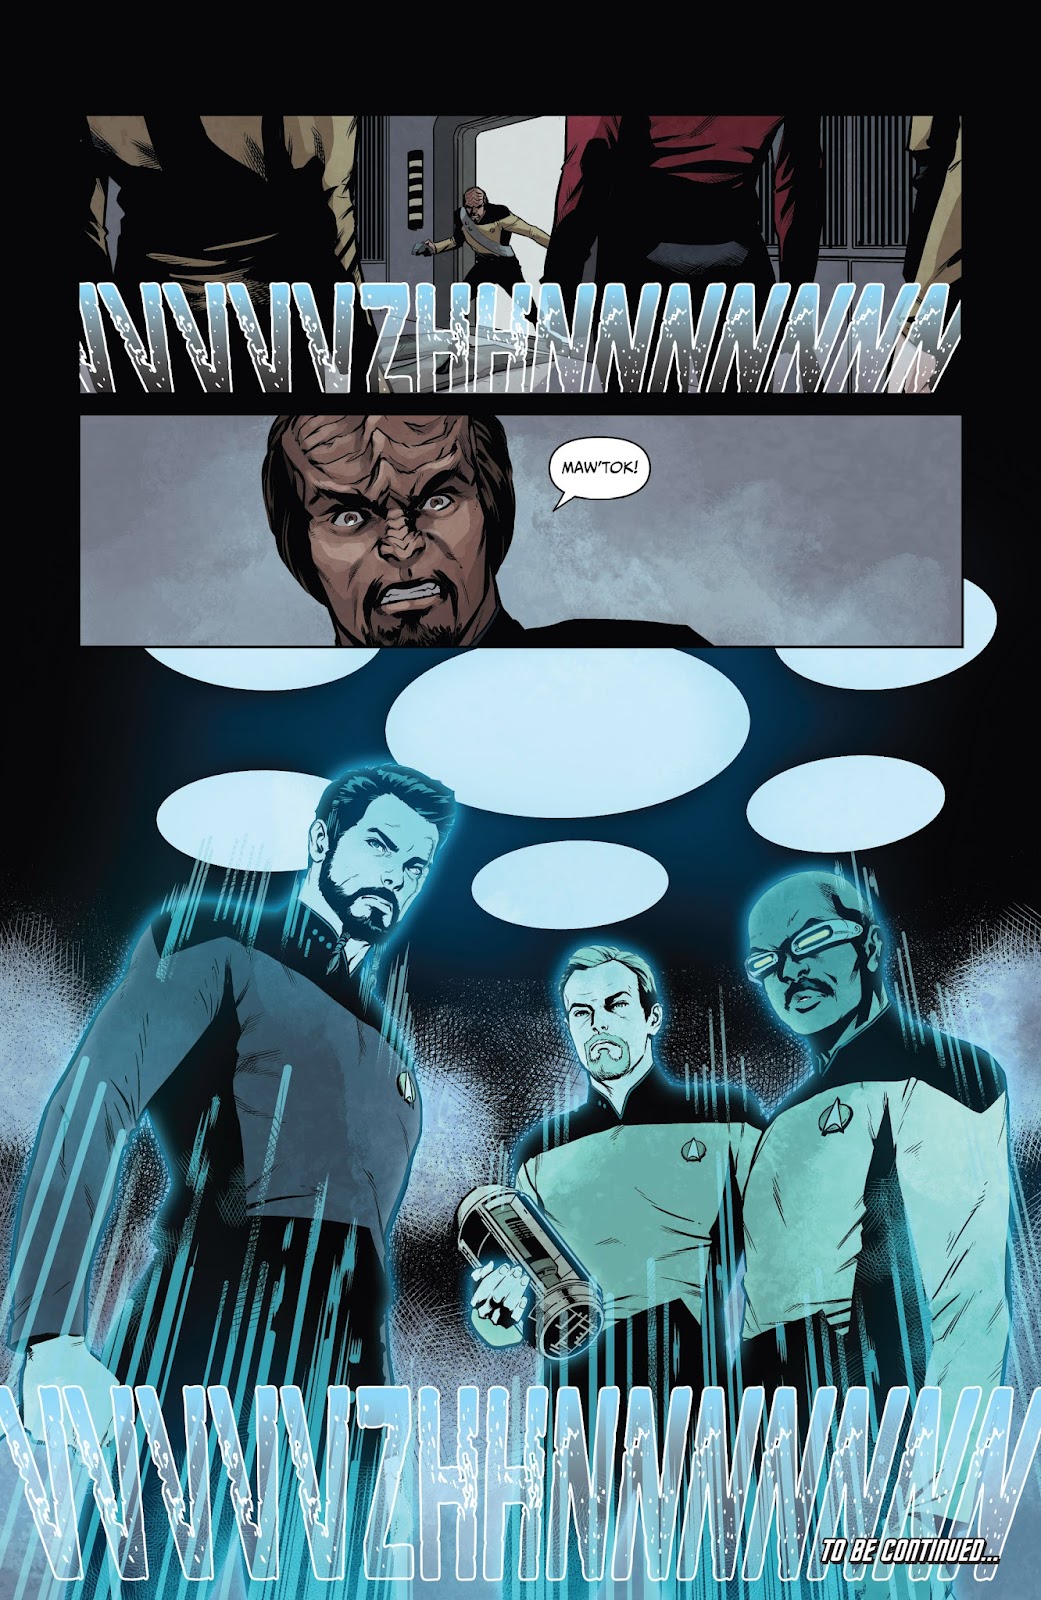 Star Trek: The Next Generation: Through the Mirror issue 1 - Page 18